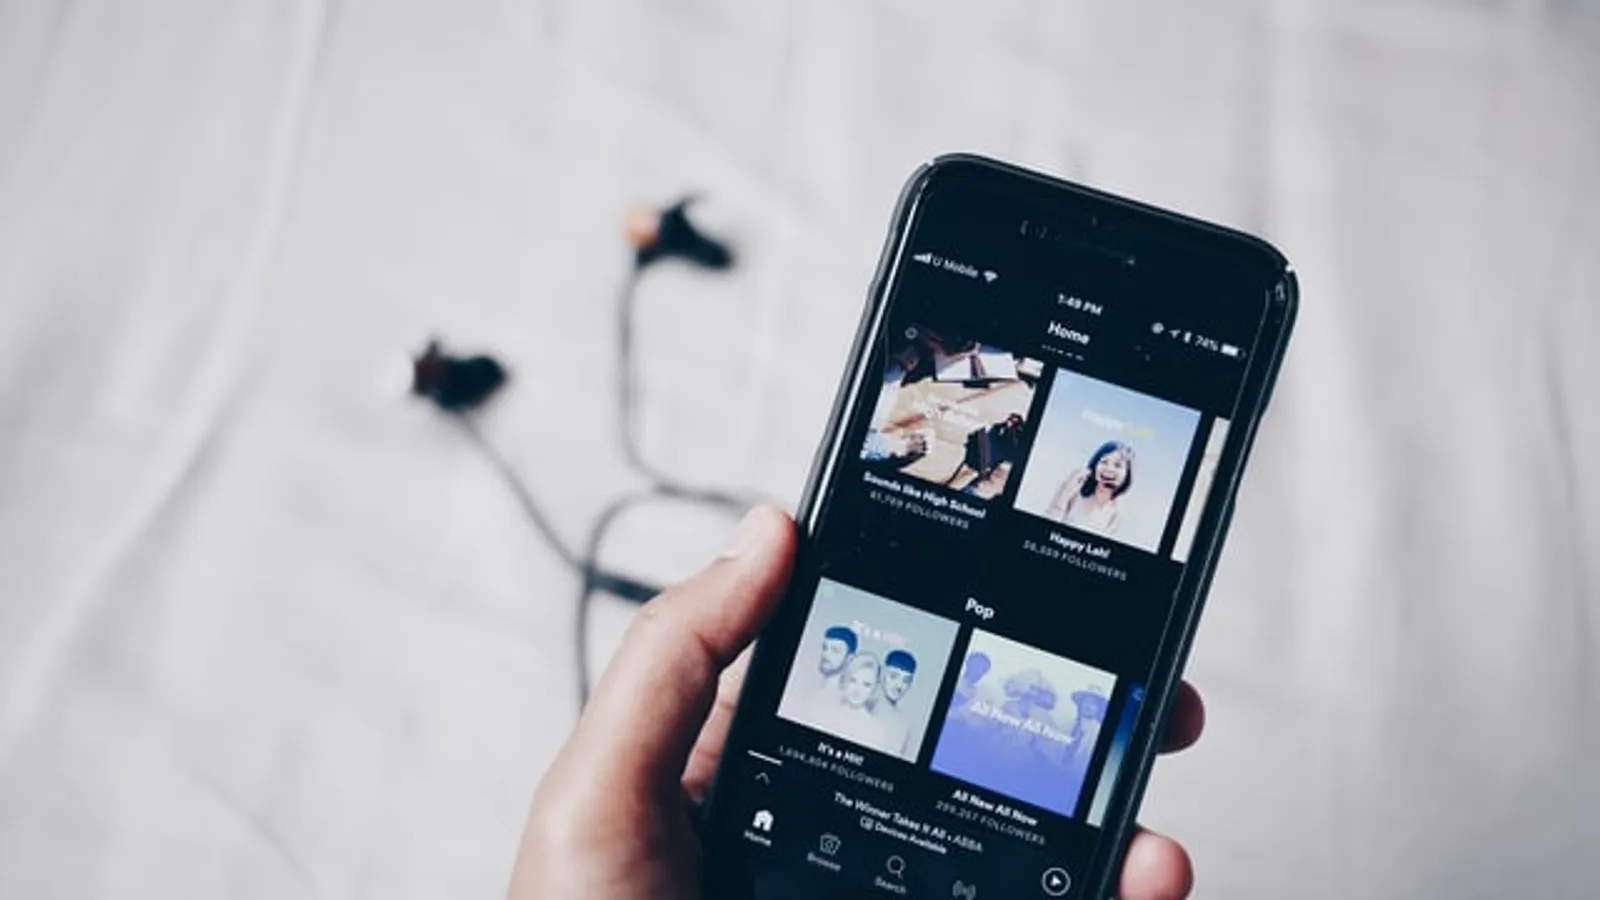 Kocak Abis! 17 Judul Playlist Spotify Lucu yang Bikin Ngakak